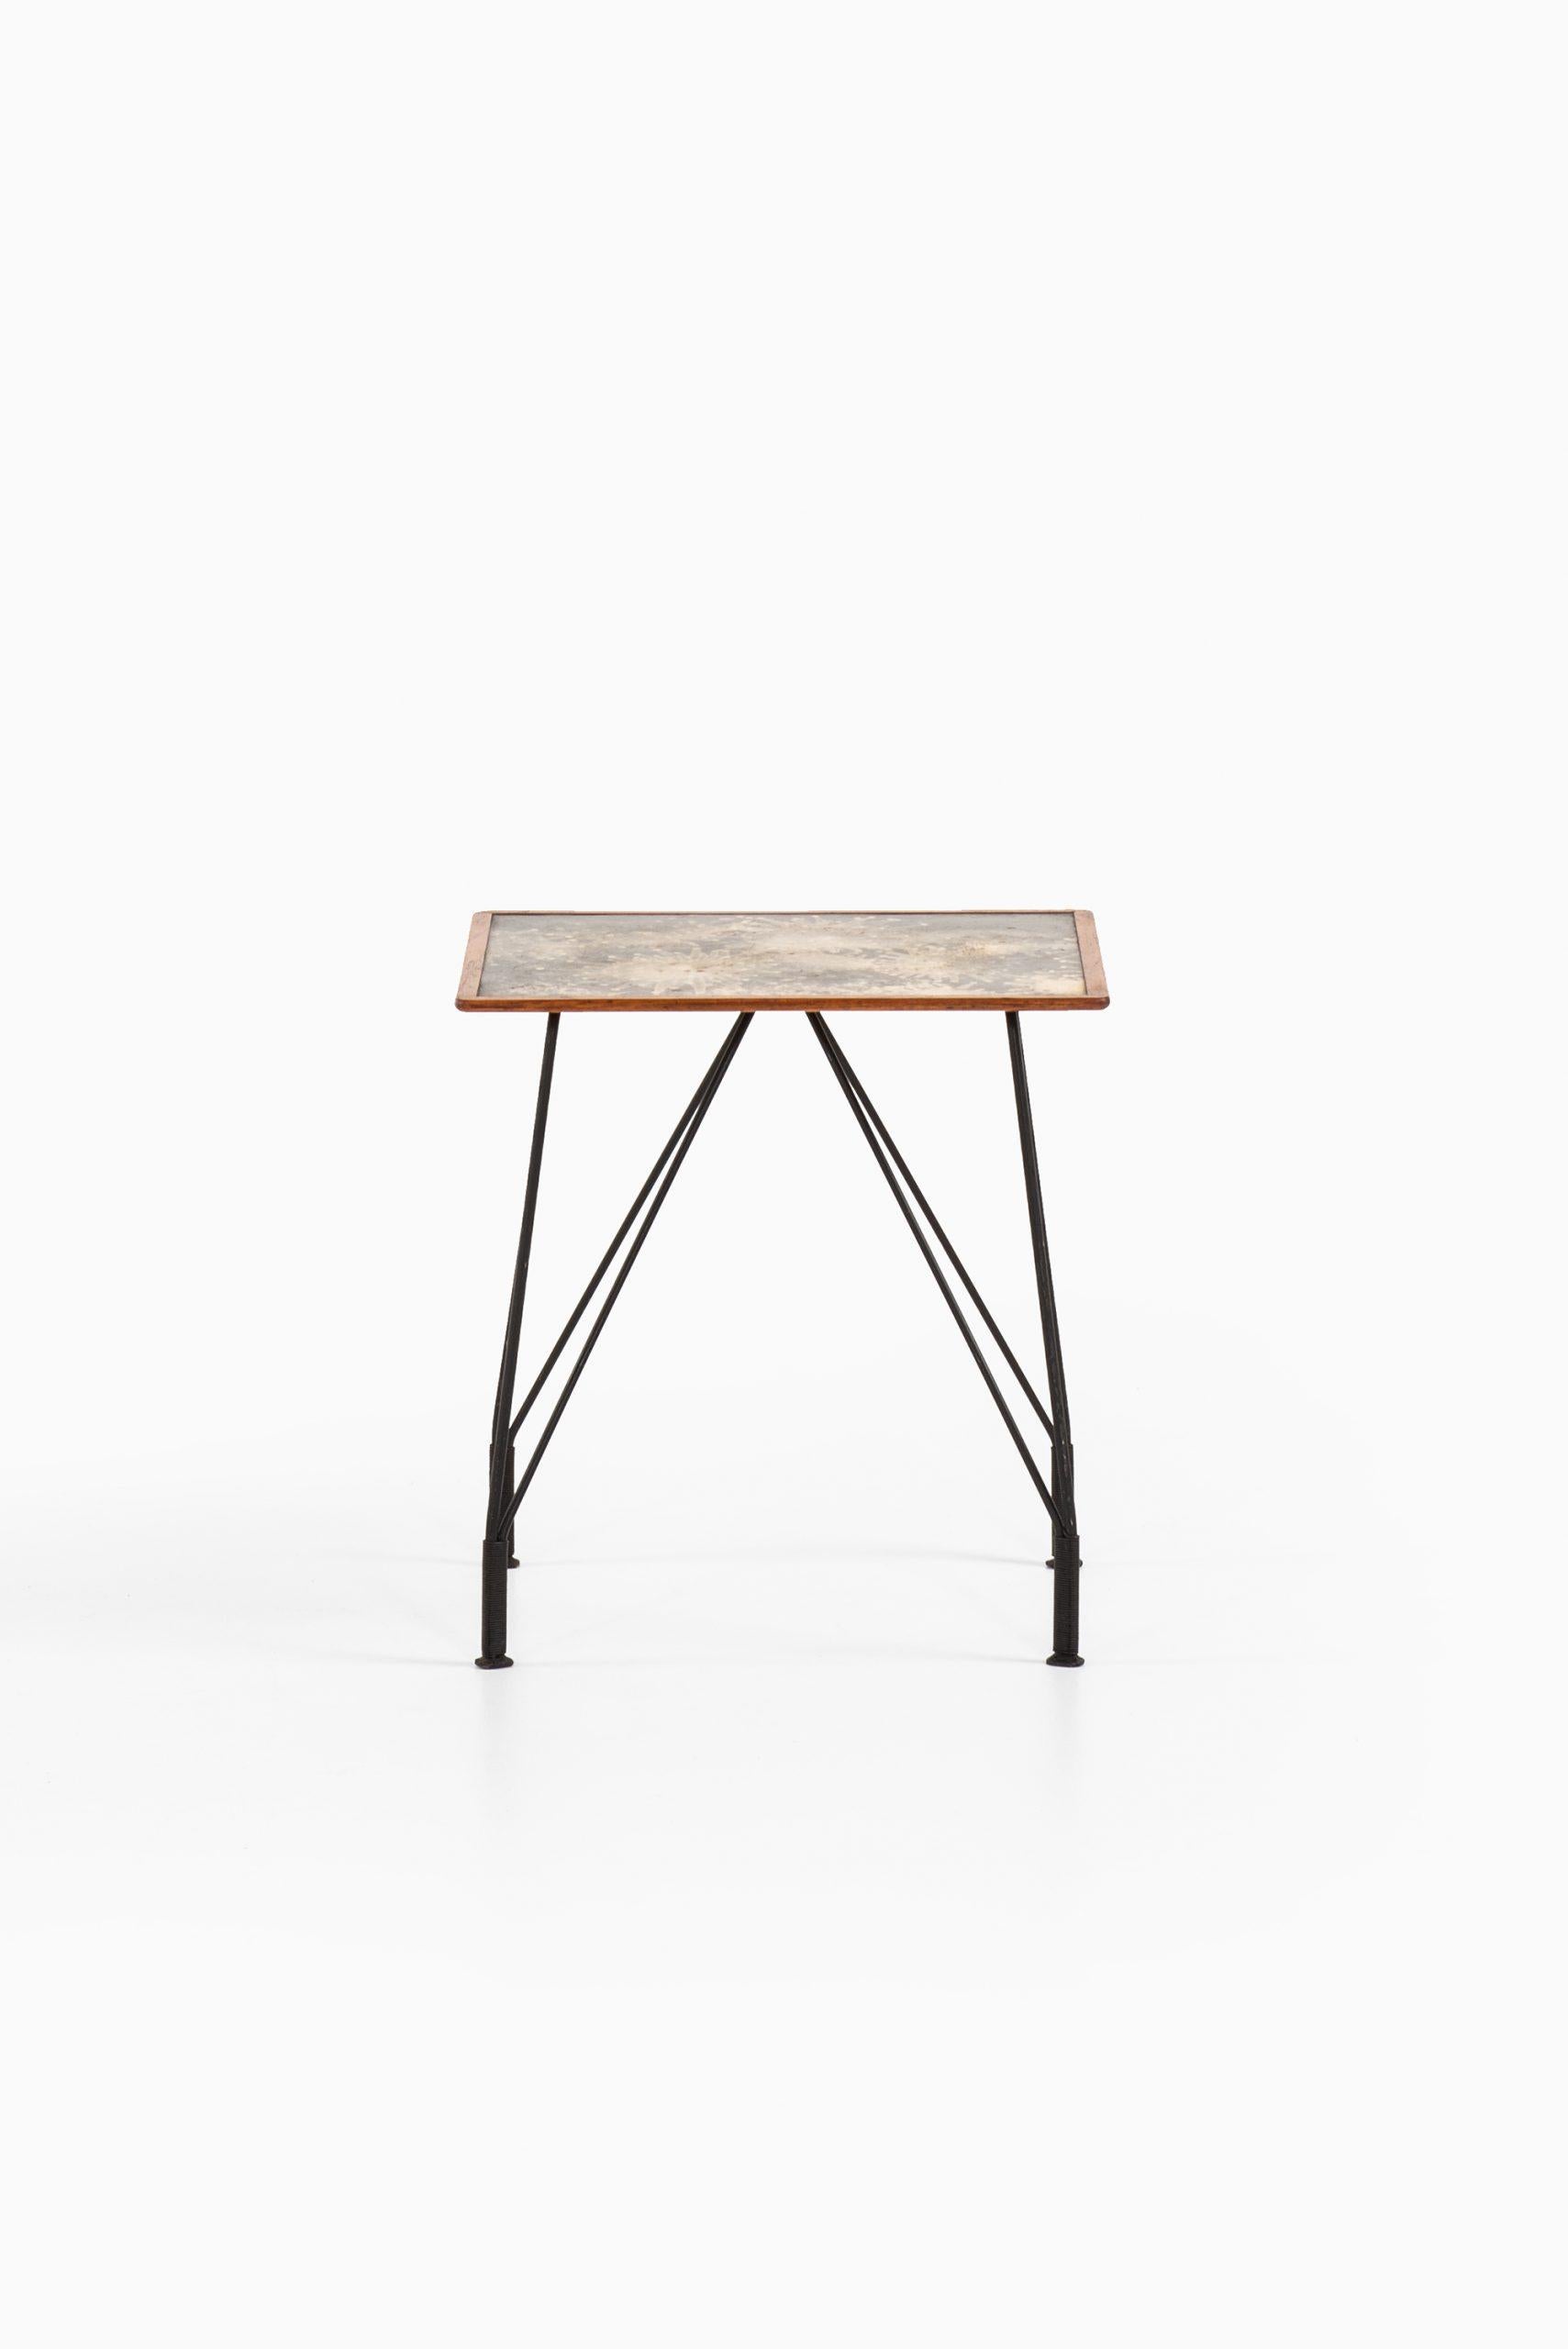 Side table designed by Hans-Agne Jakobsson. Produced by Hans-Agne Jakobsson in Markaryd, Sweden.